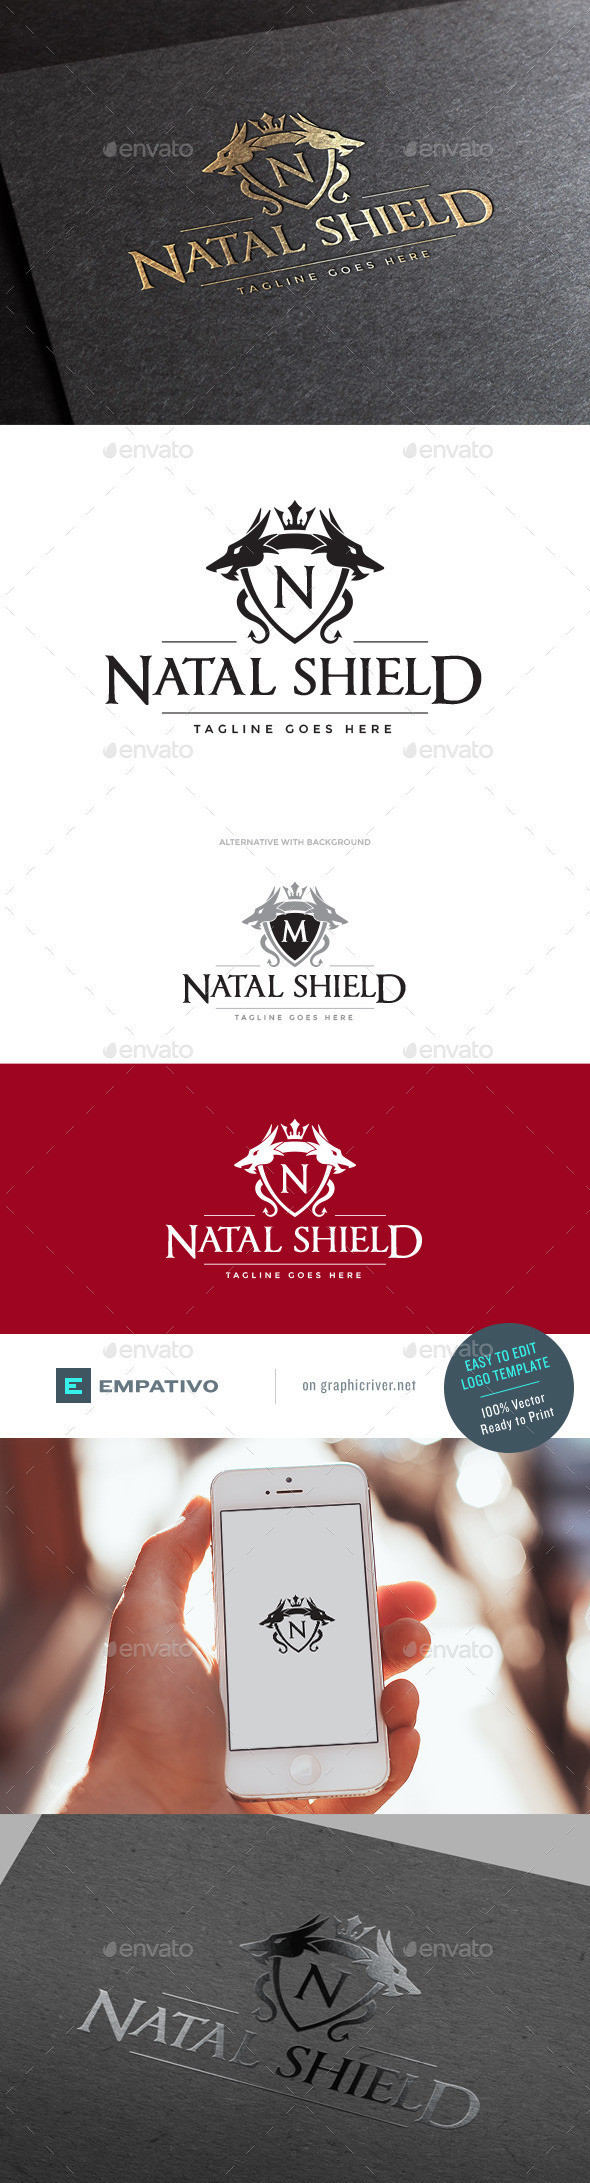 Natal shield logo template